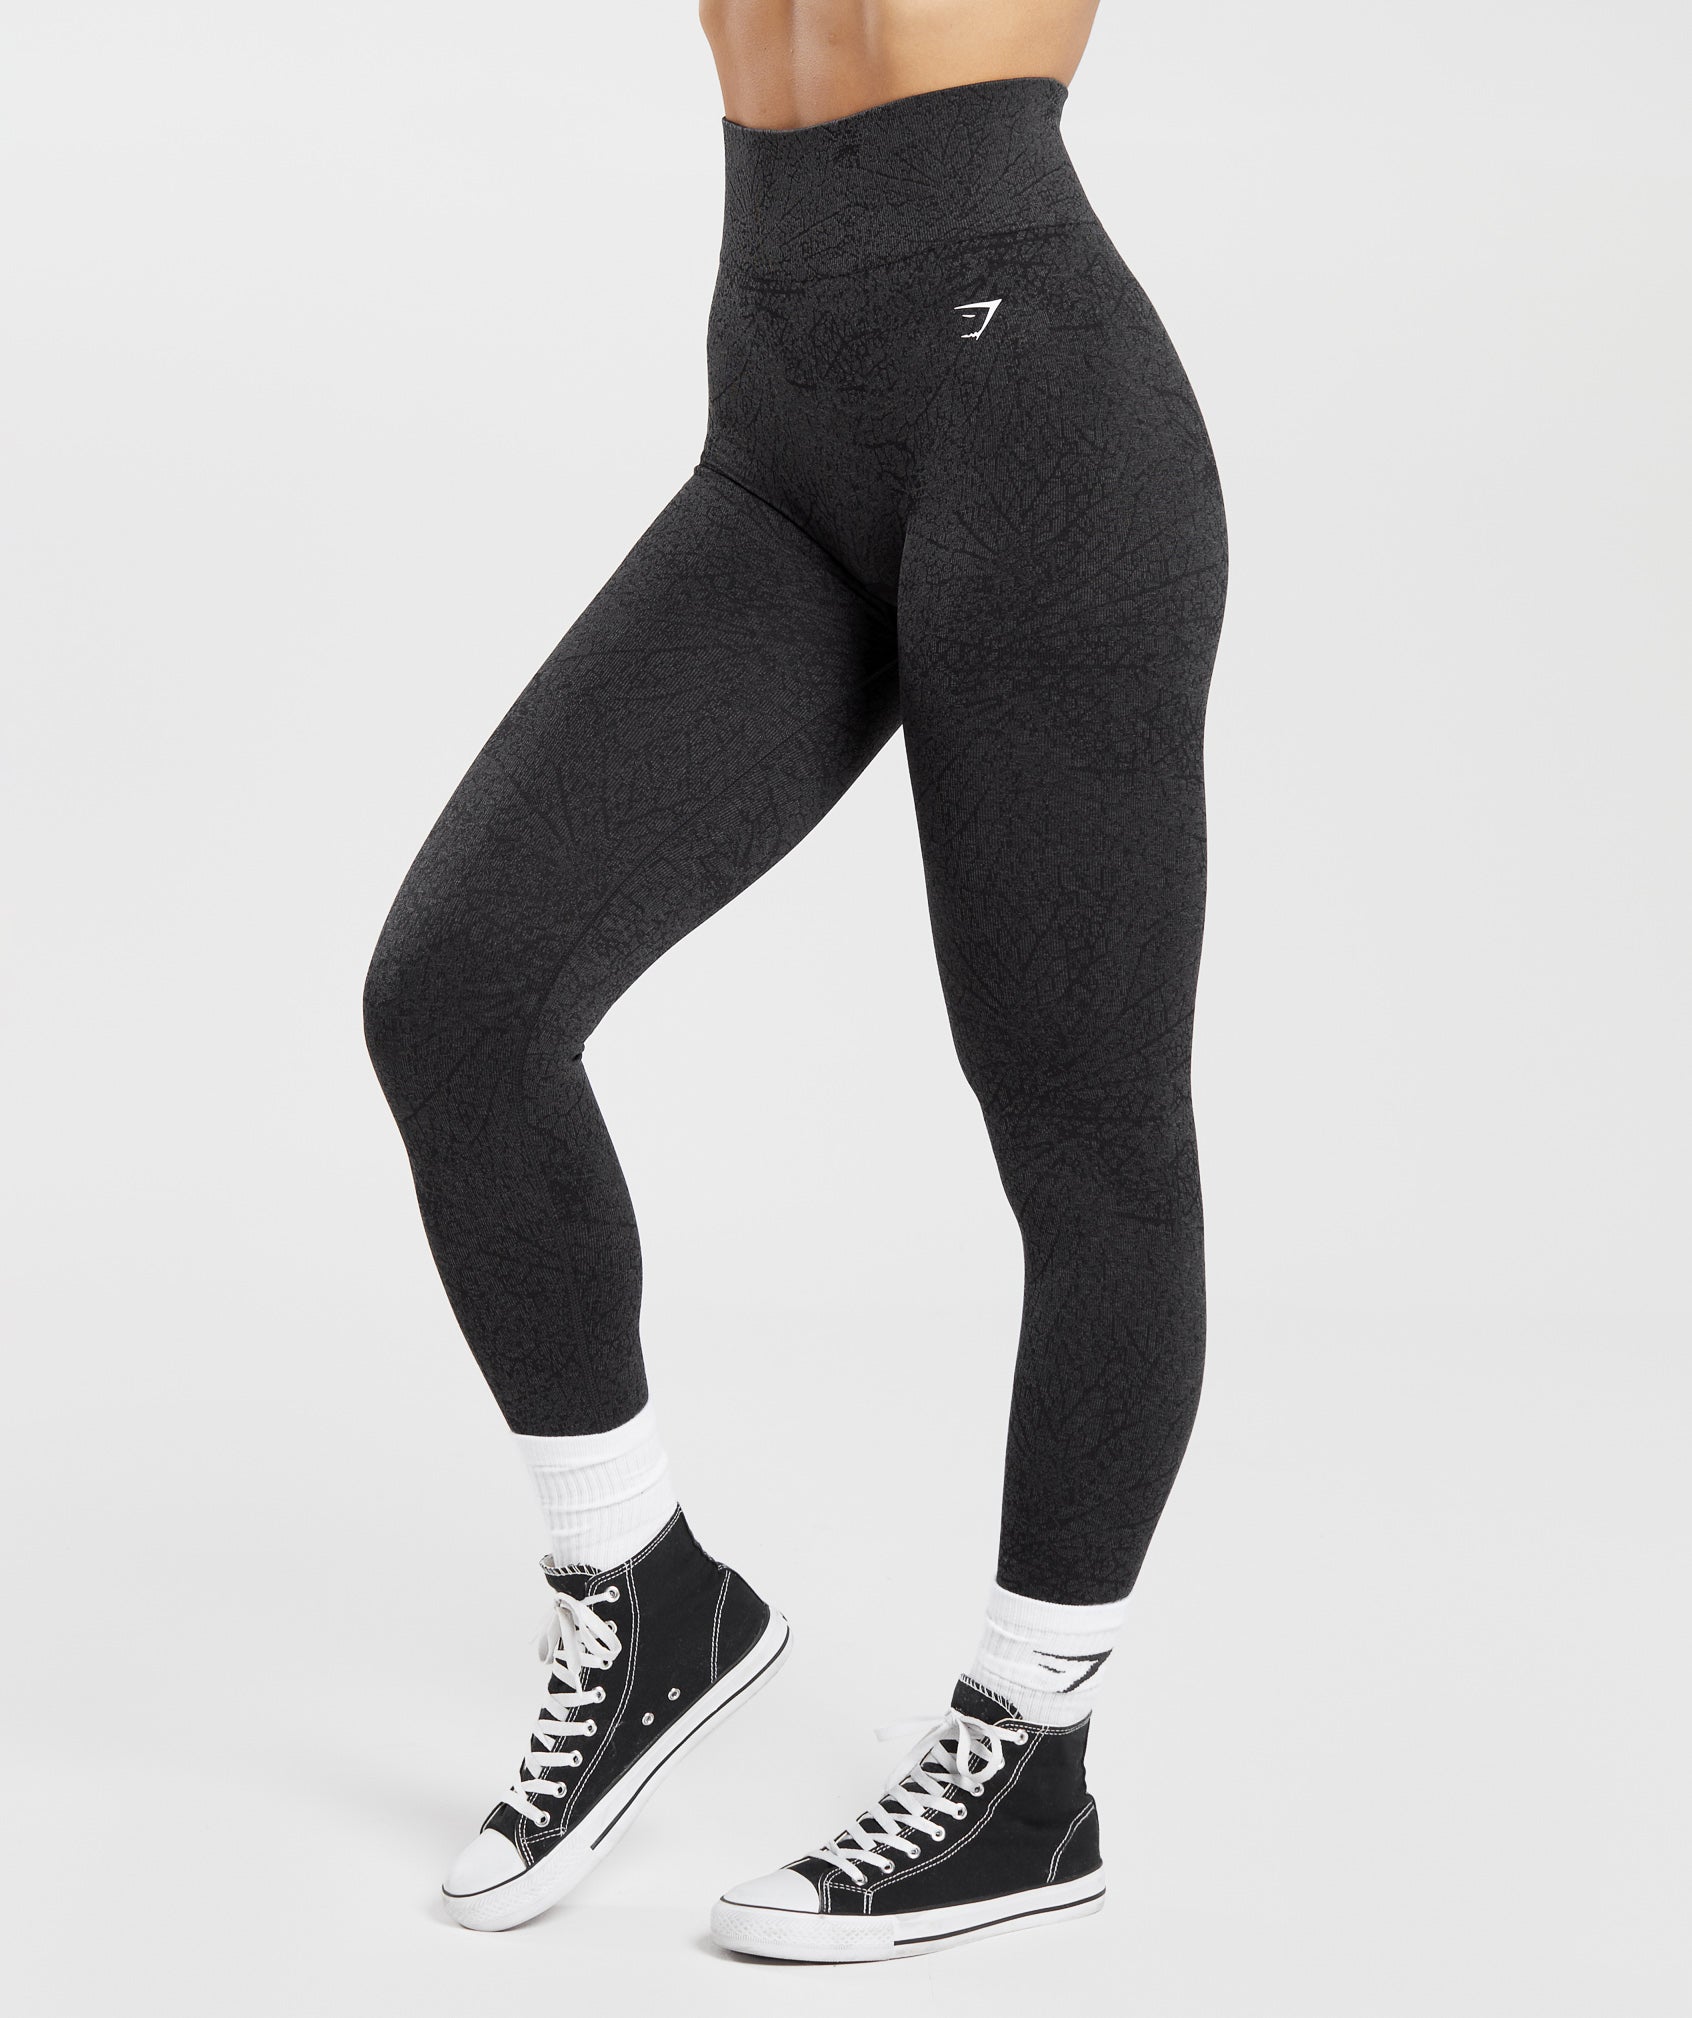 Gymshark Adapt Safari Tight Shorts - Black/Asphalt Grey